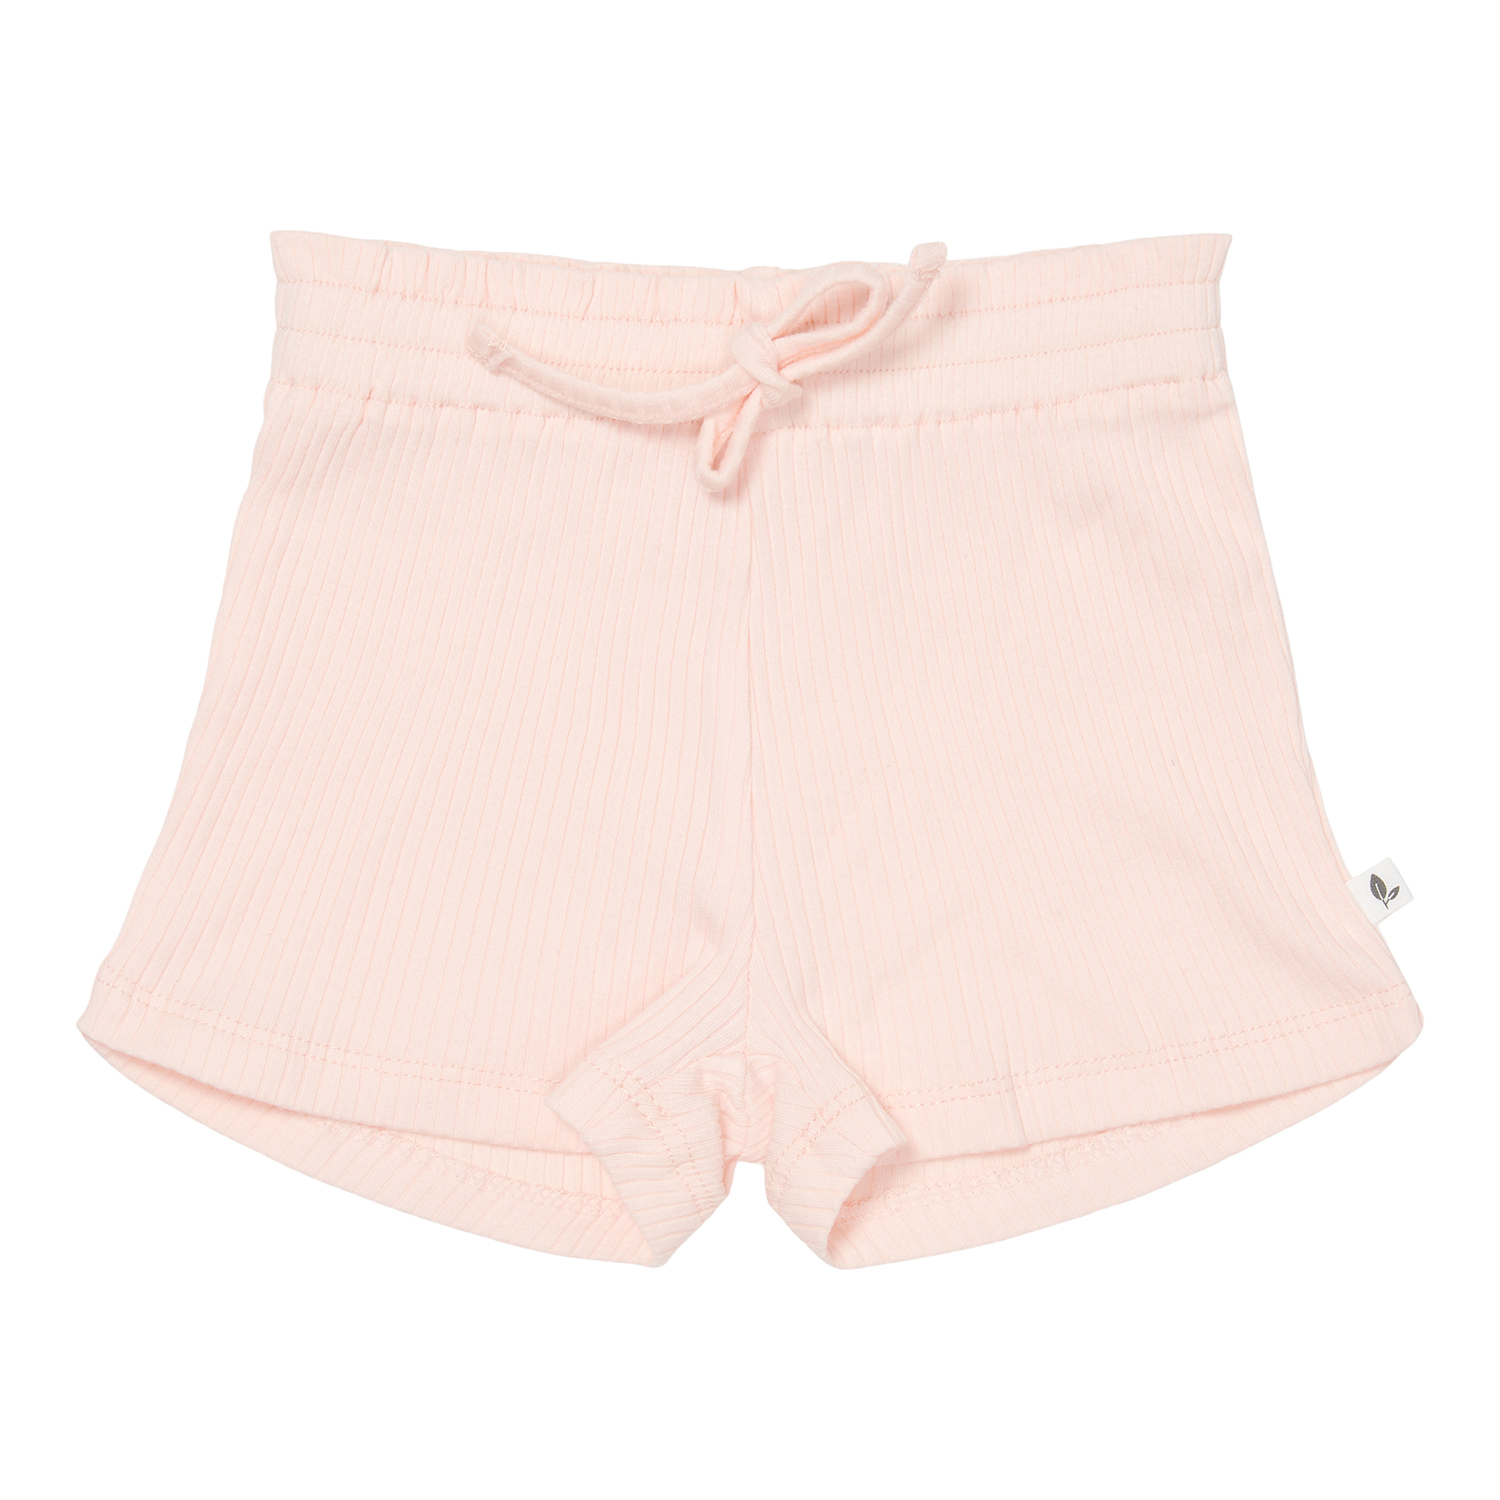 Kurze Hose / Shorts Rippe Pure soft pink (Gr. 86)